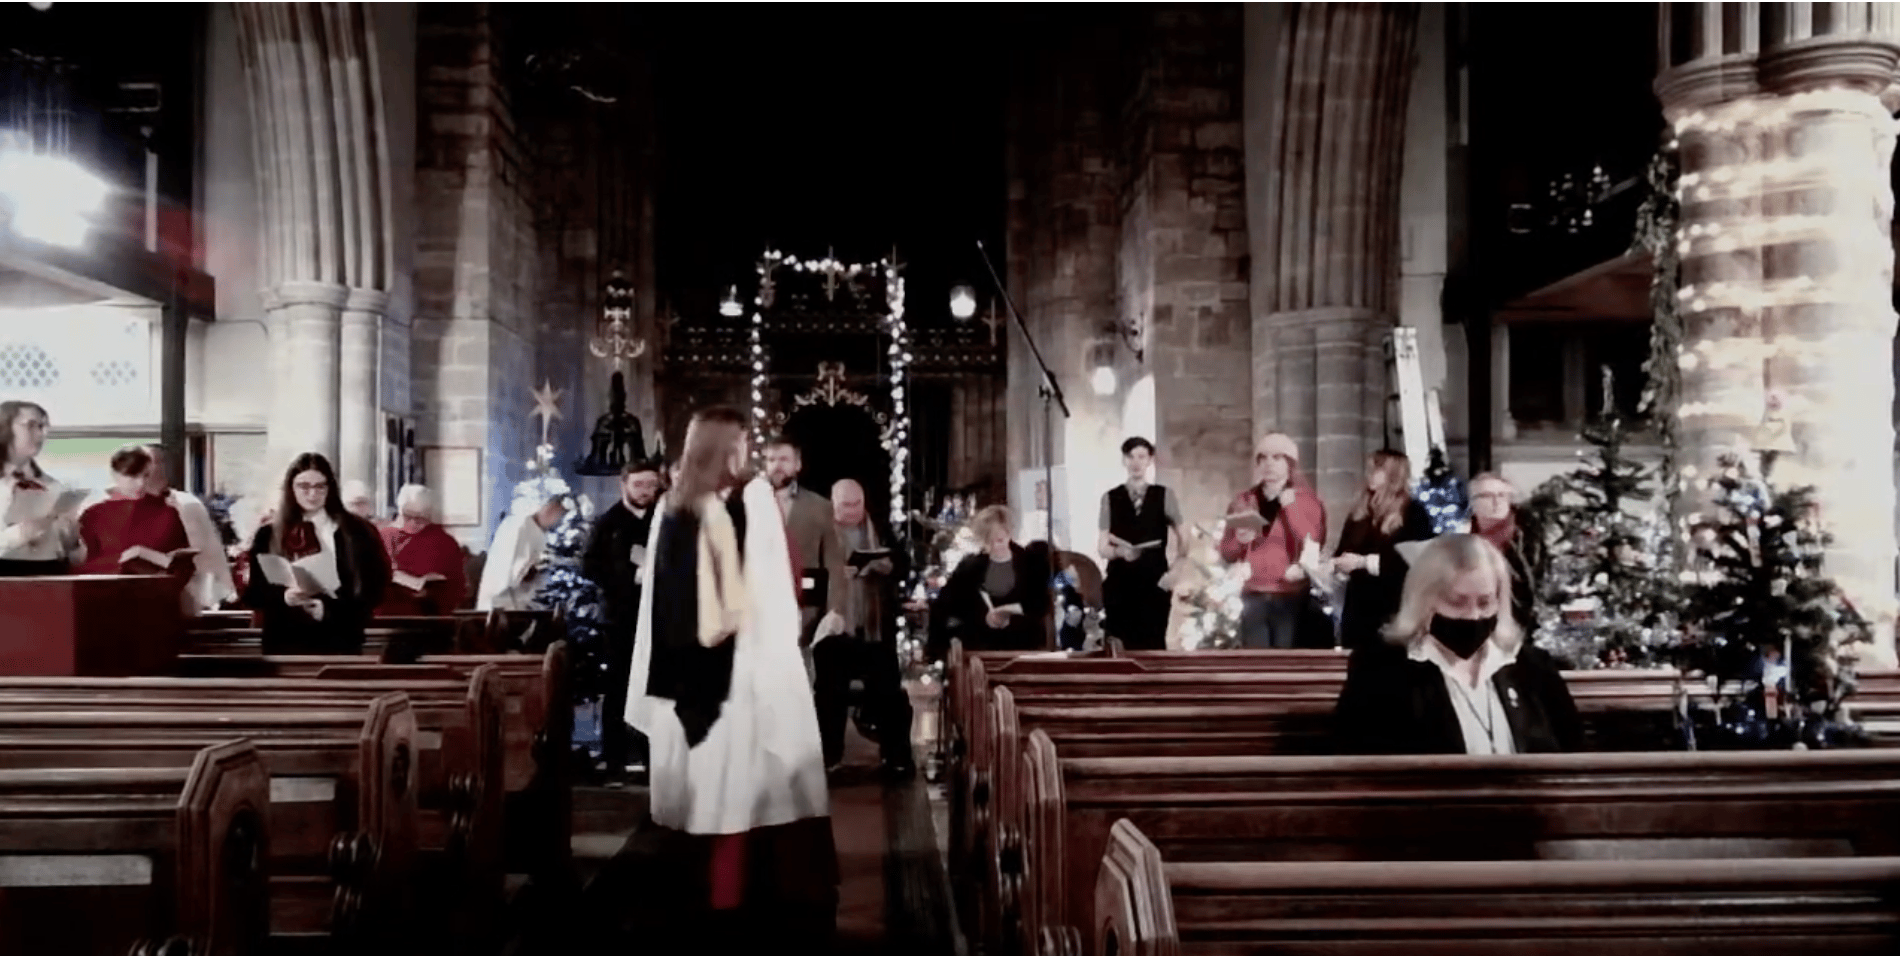 U.K. church performs iconic Christmas carol “God Rest Ye Merry, Gentlemen” with altered lyrics reflecting “woke, unbiblical” ideology